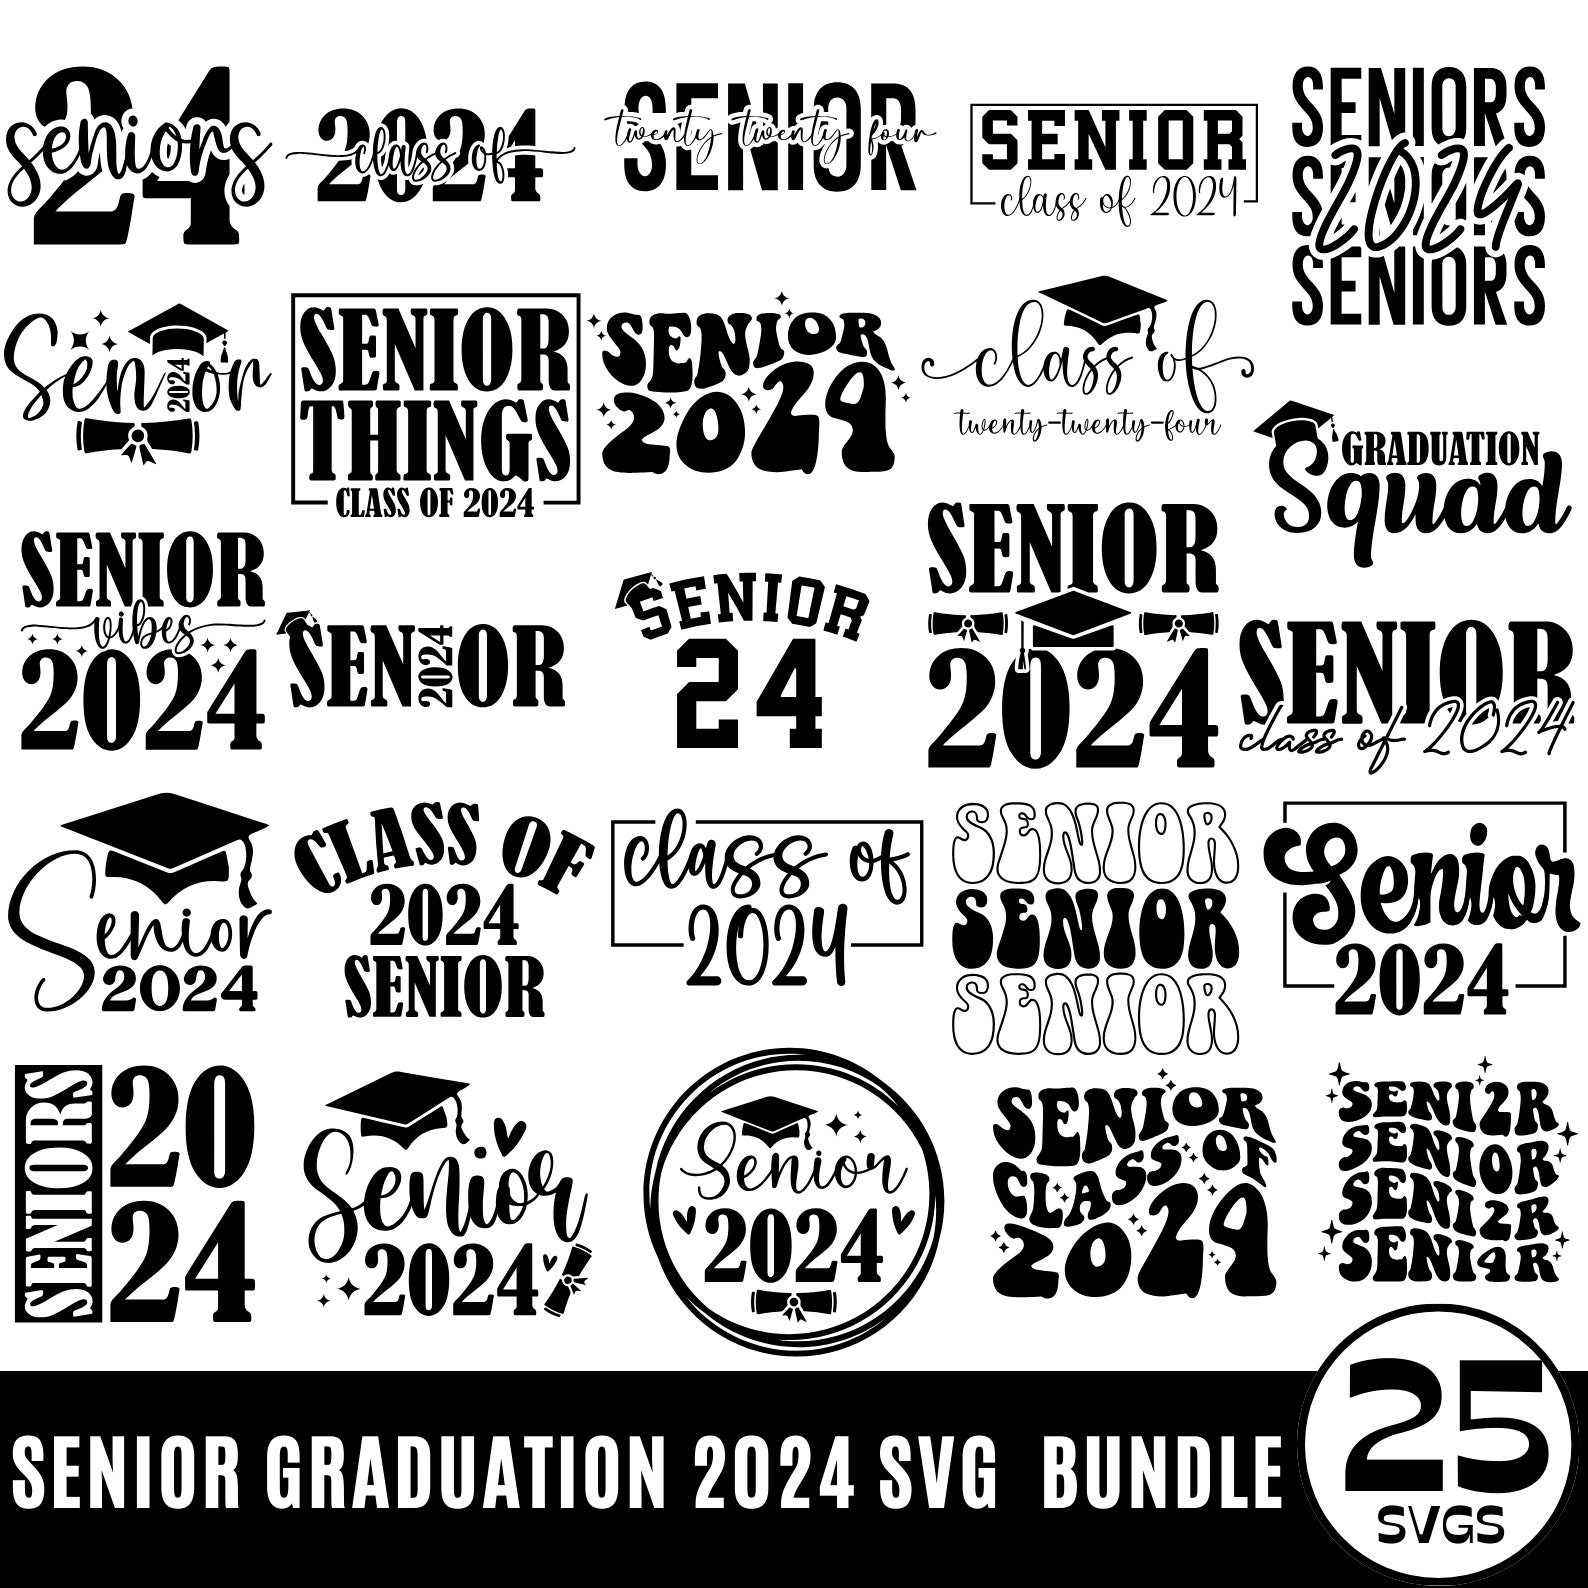 Seniors Class of 2024 Sweatpants Graduation Gifts Logo 